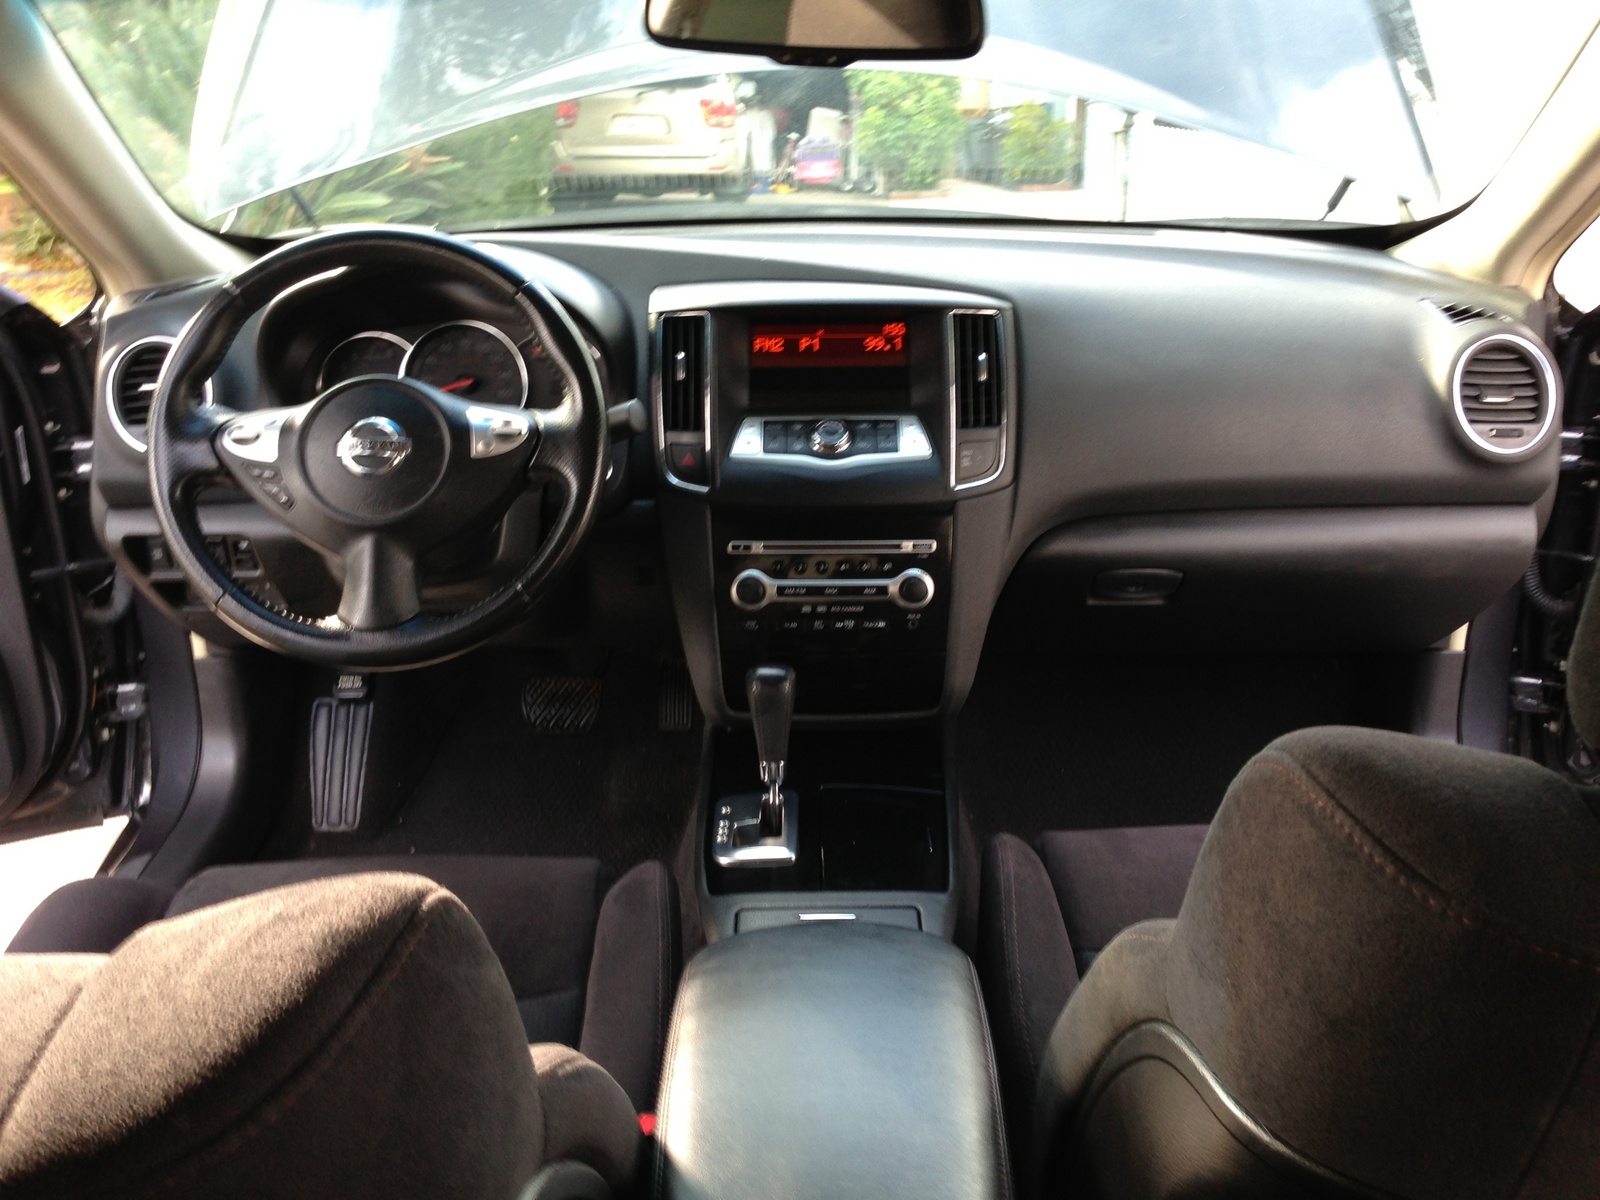 2010 Nissan maxima interior dimensions